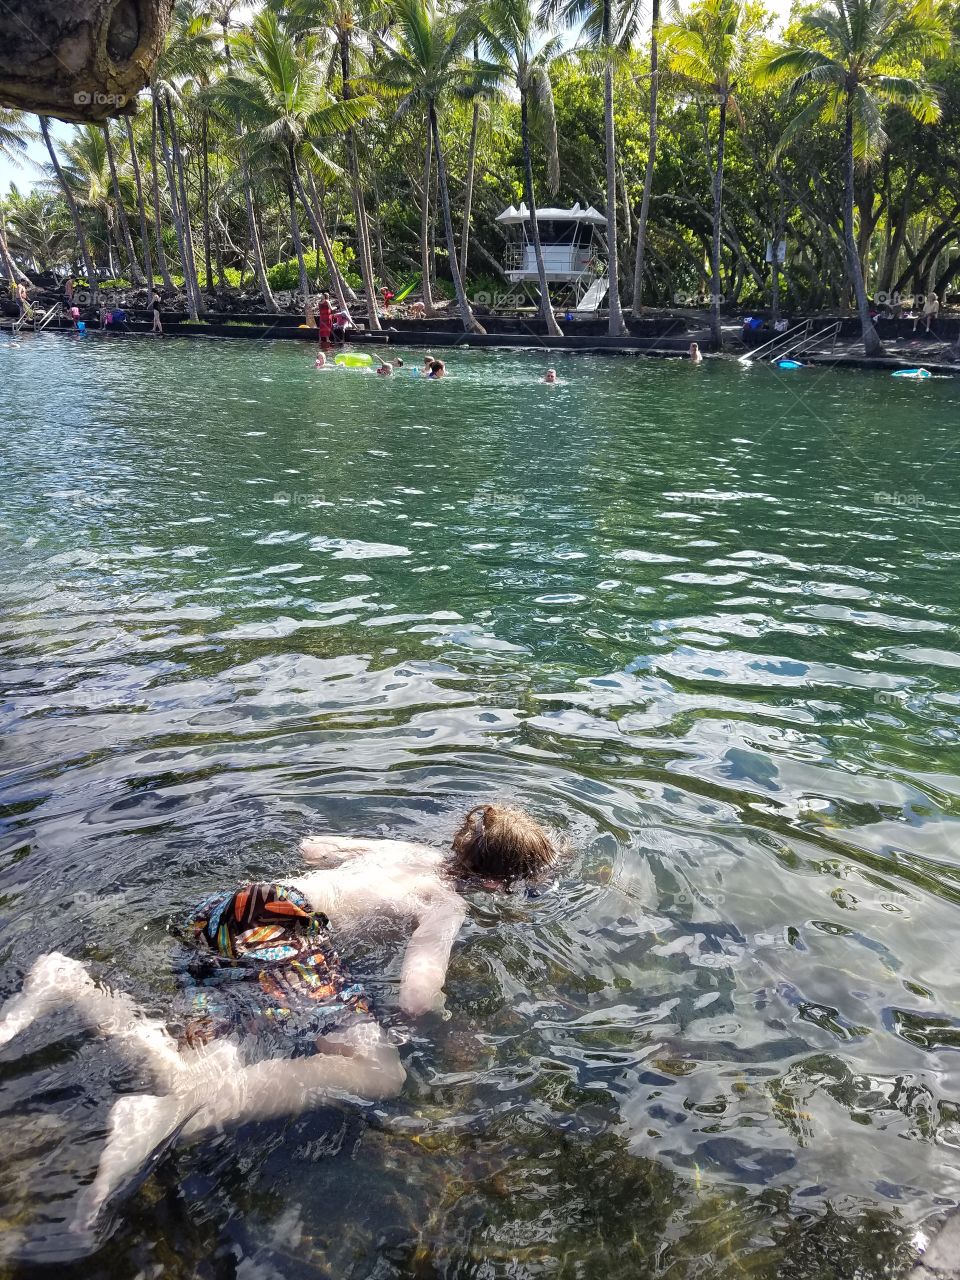 Endless Summer
Kapoho Hawaii swim hole